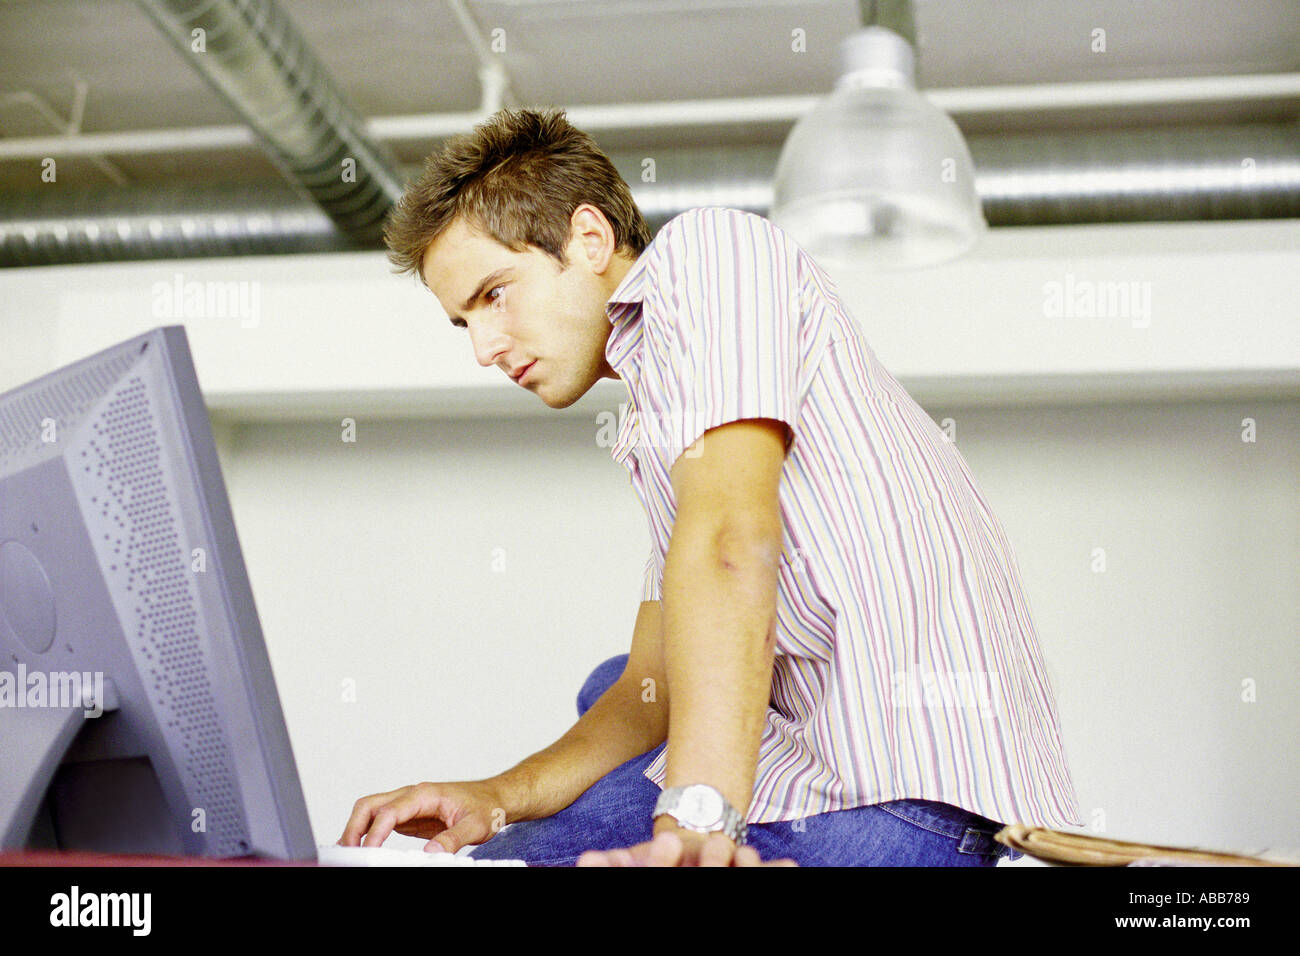 Man using computer Stock Photo